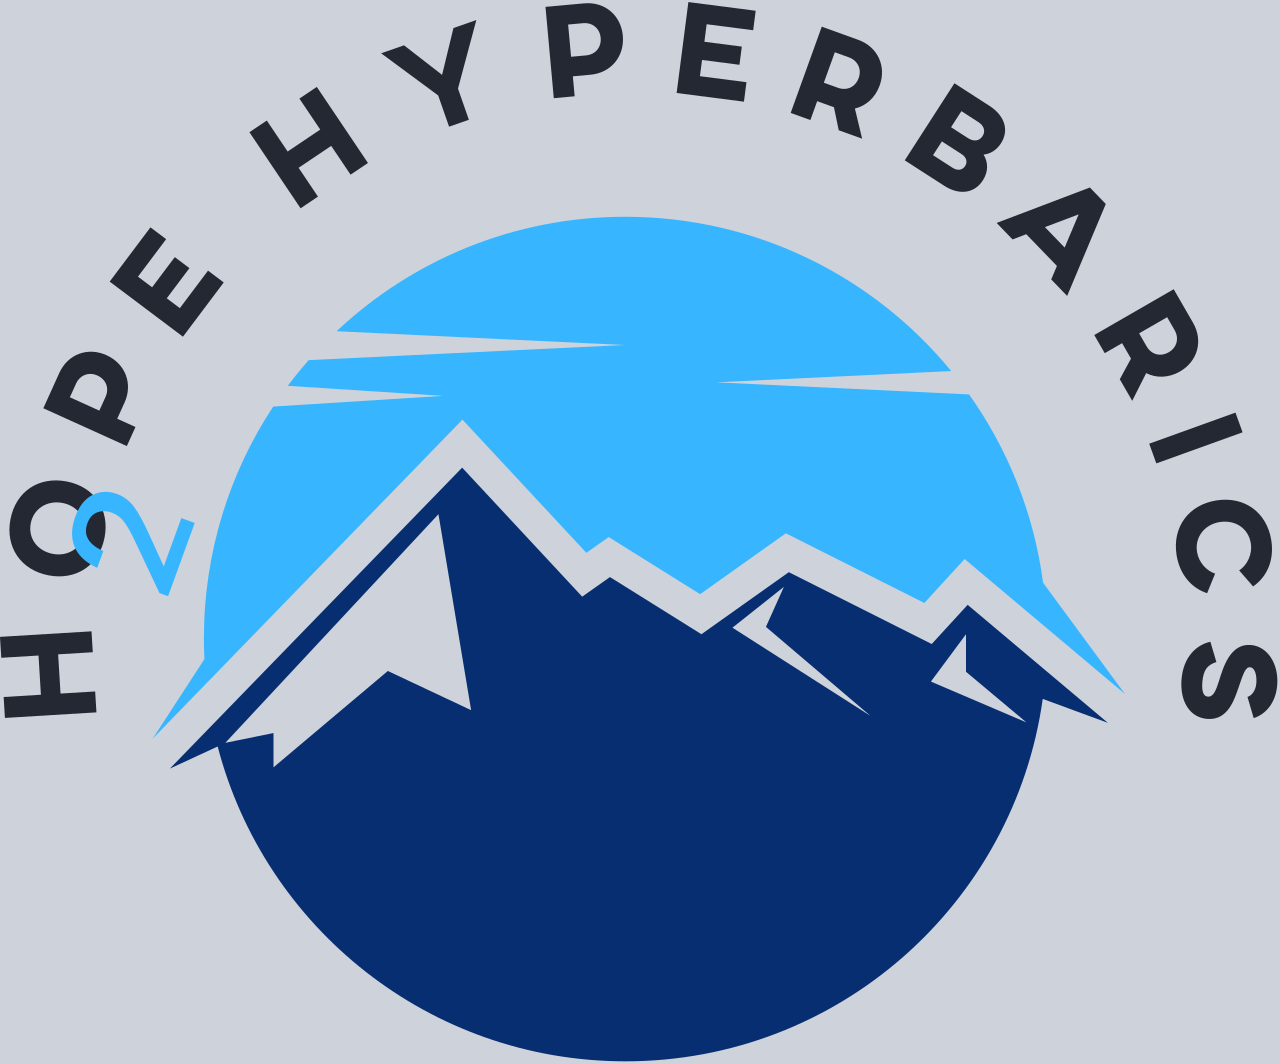 Hope Hyperbarics's logo